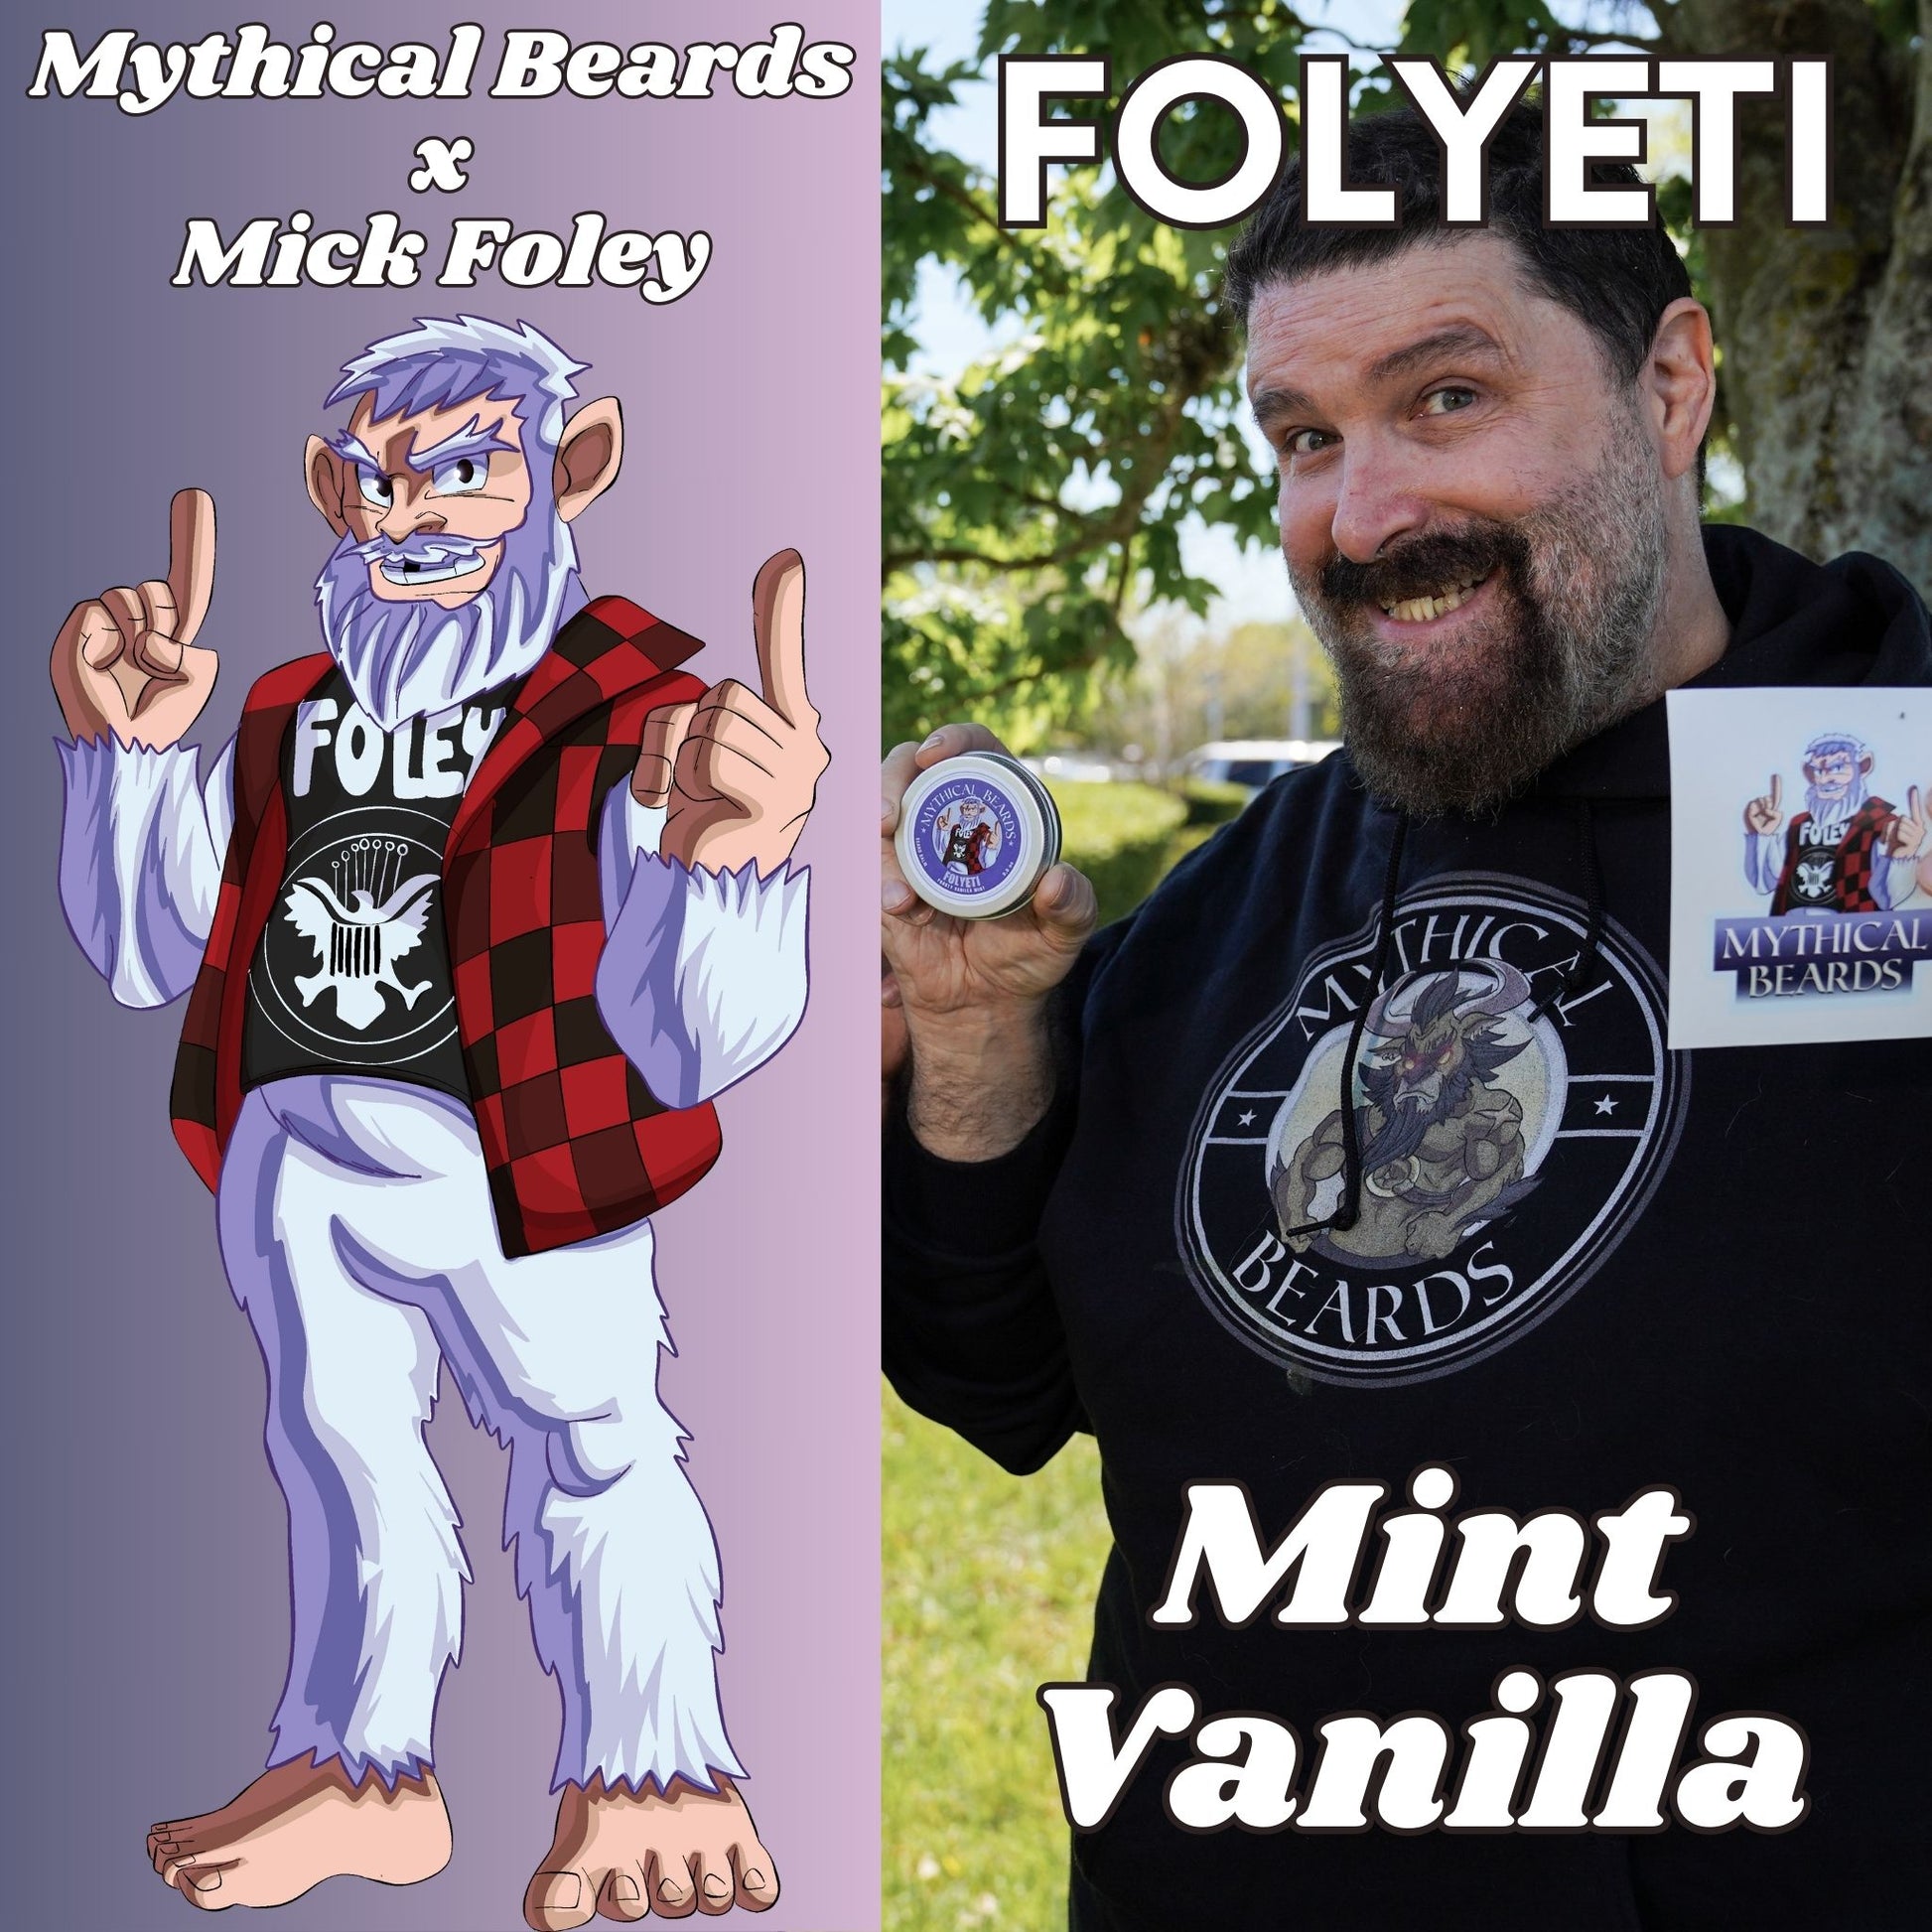 Folyeti - Mick Foley x Mythical Beards Collab